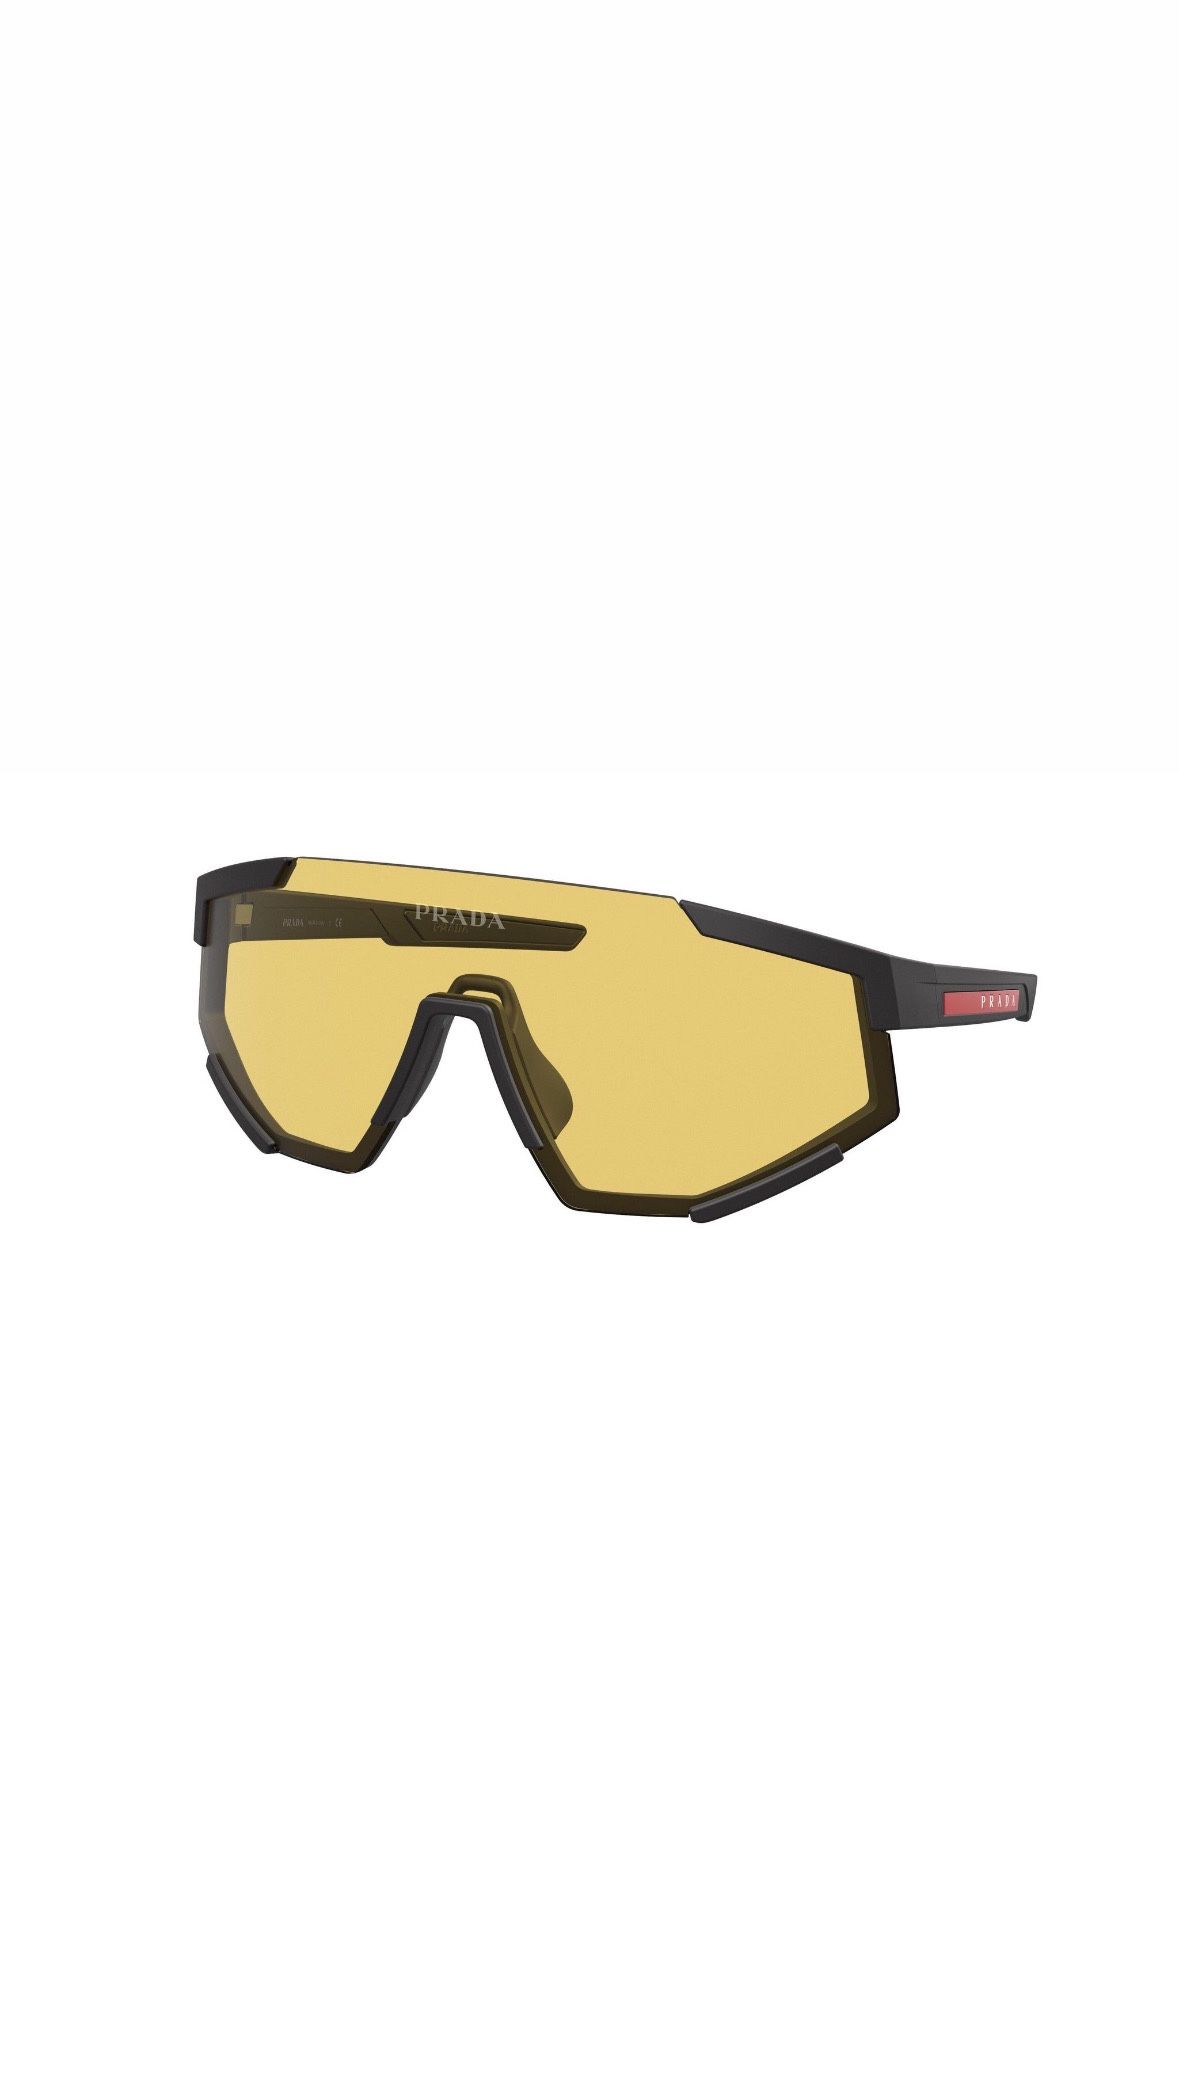 Prada Linea Rossa PS-04WS DG004Q Sunglasses Men's Black/Yellow Shield 39-137-130